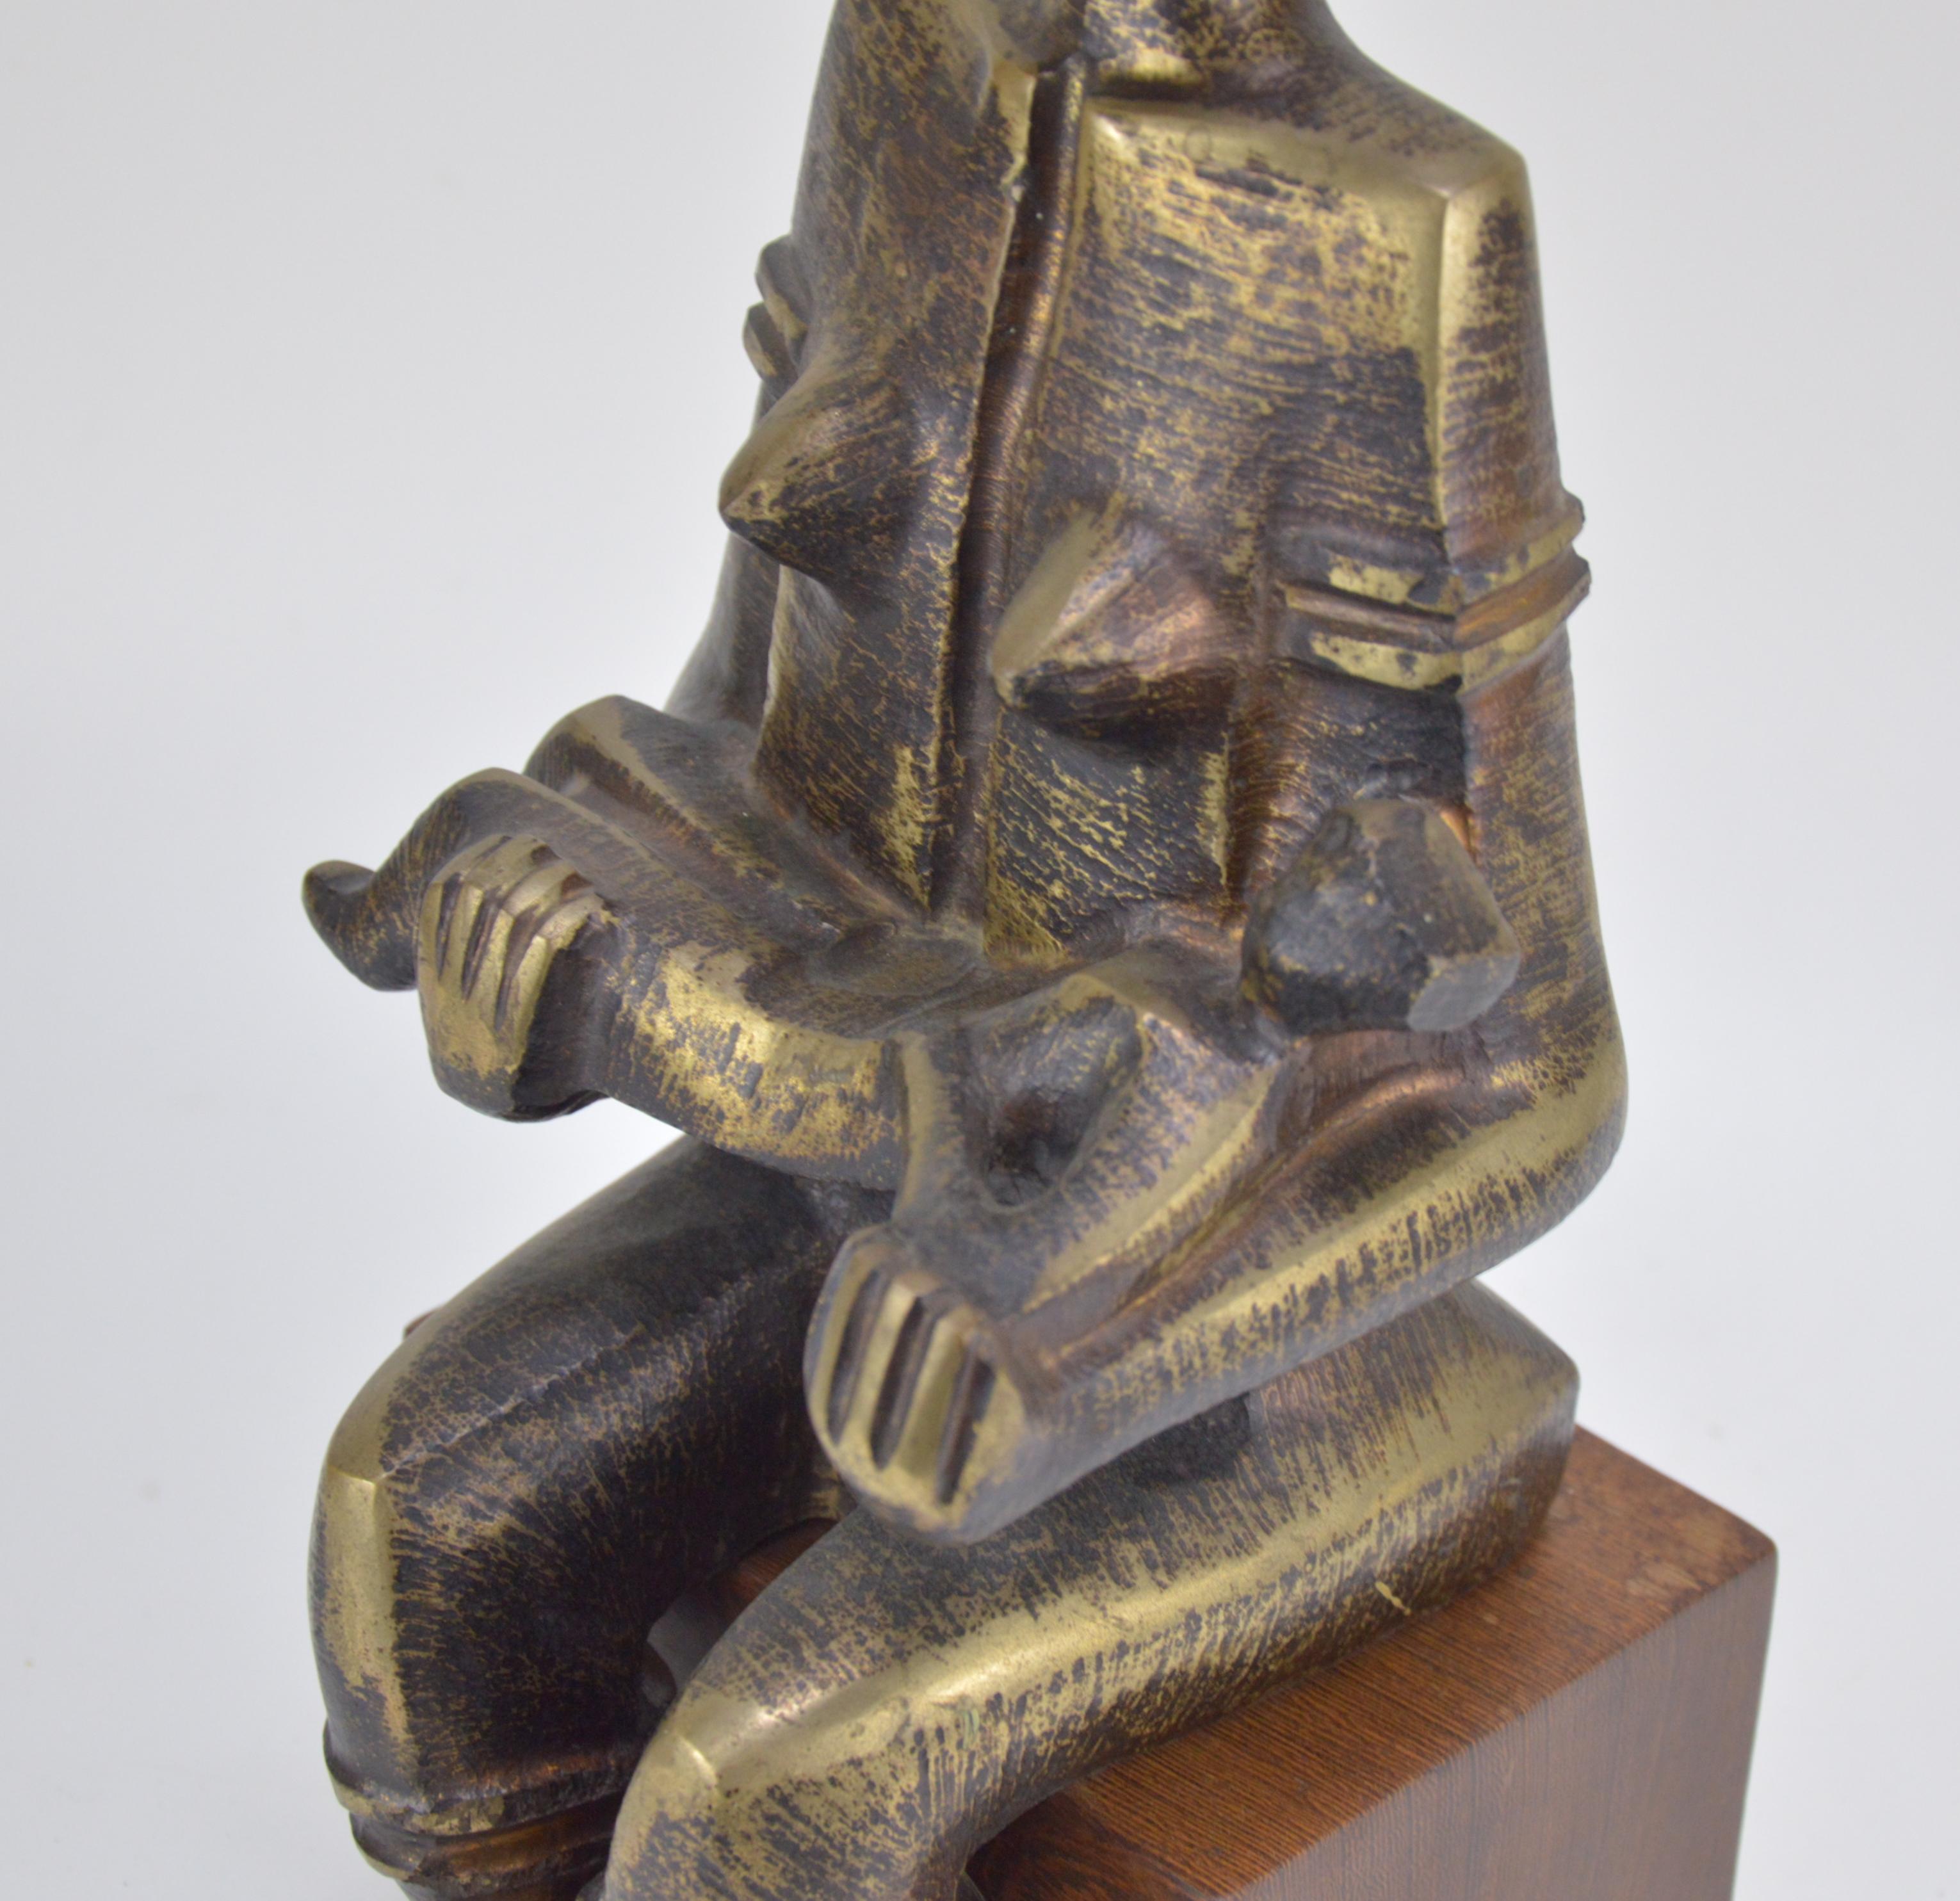 congolese sculpture